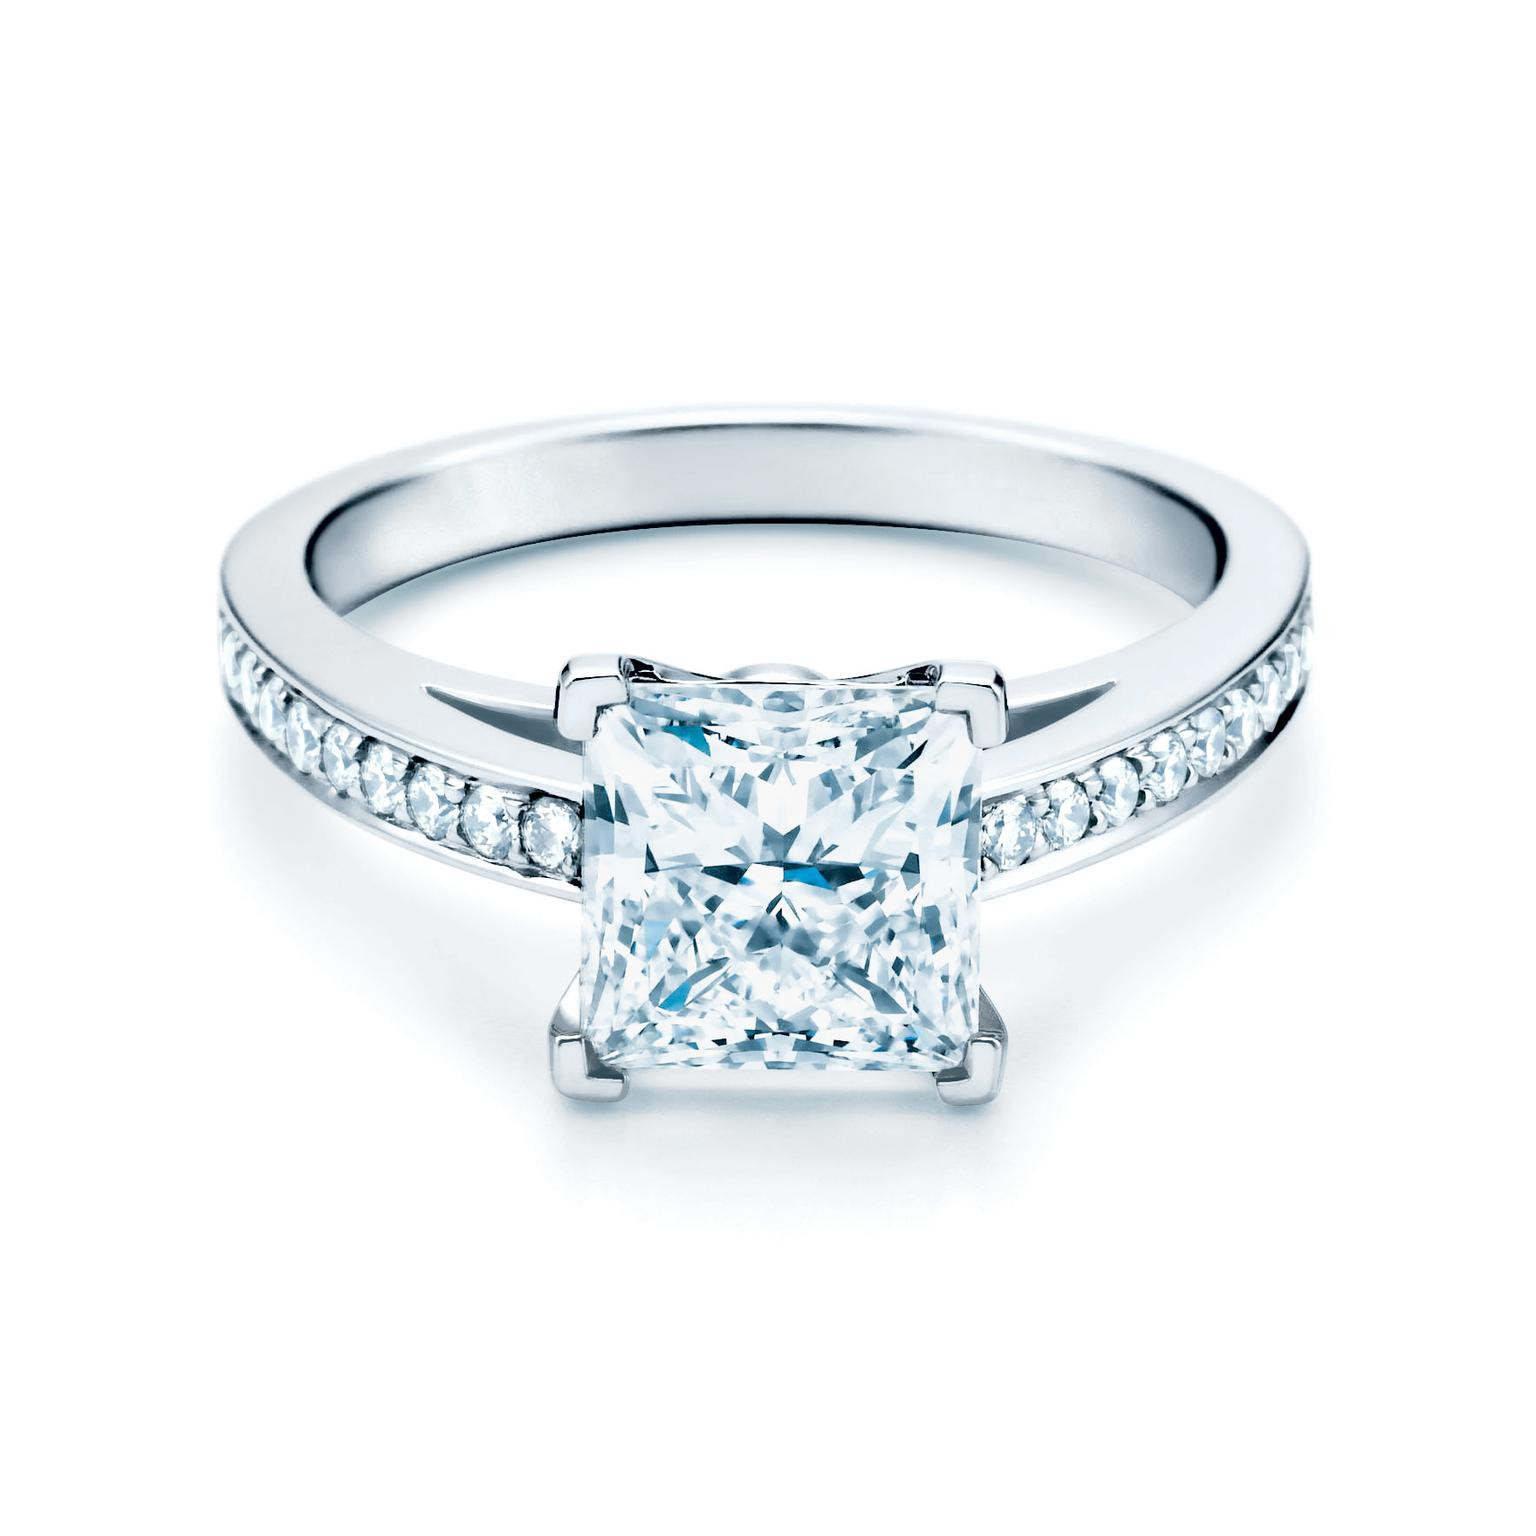 Tiffany Diamond Rings
 Grace princess cut diamond engagement ring